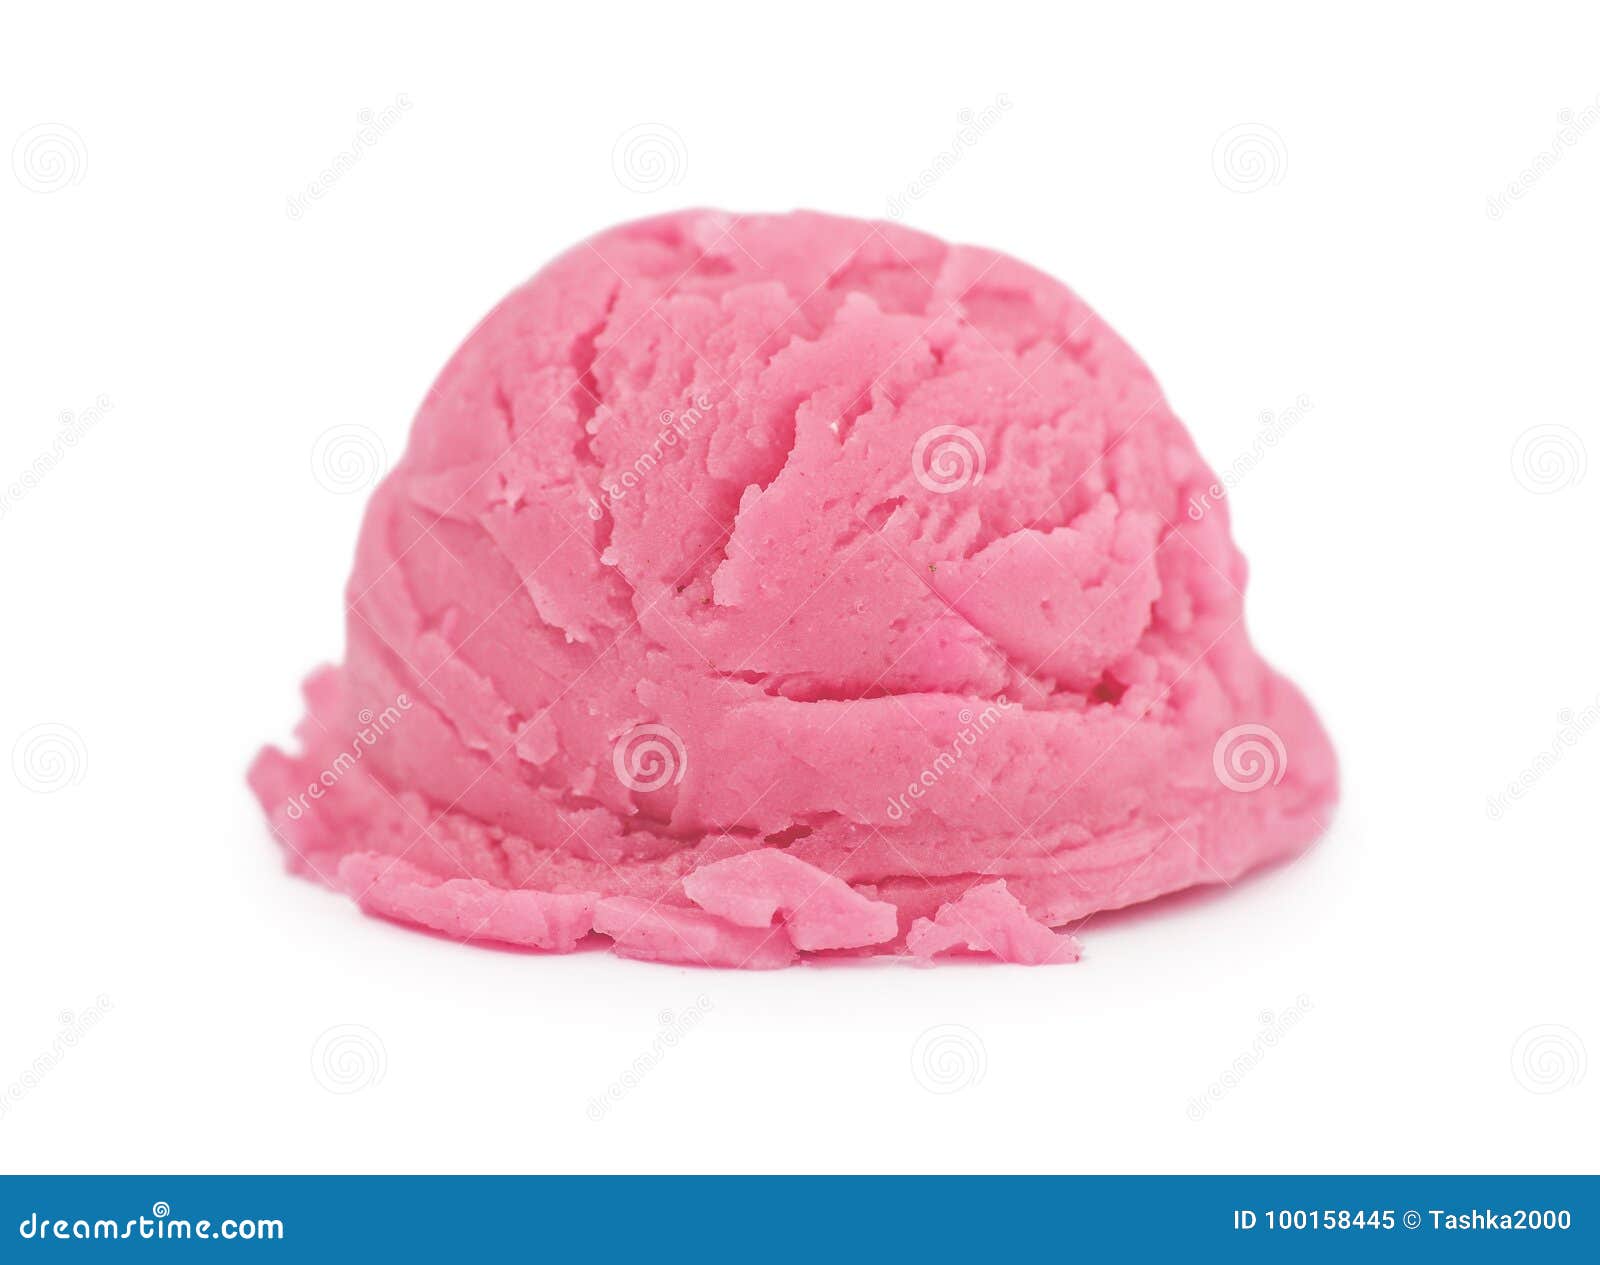 https://thumbs.dreamstime.com/z/scoop-pink-ice-cream-white-background-100158445.jpg